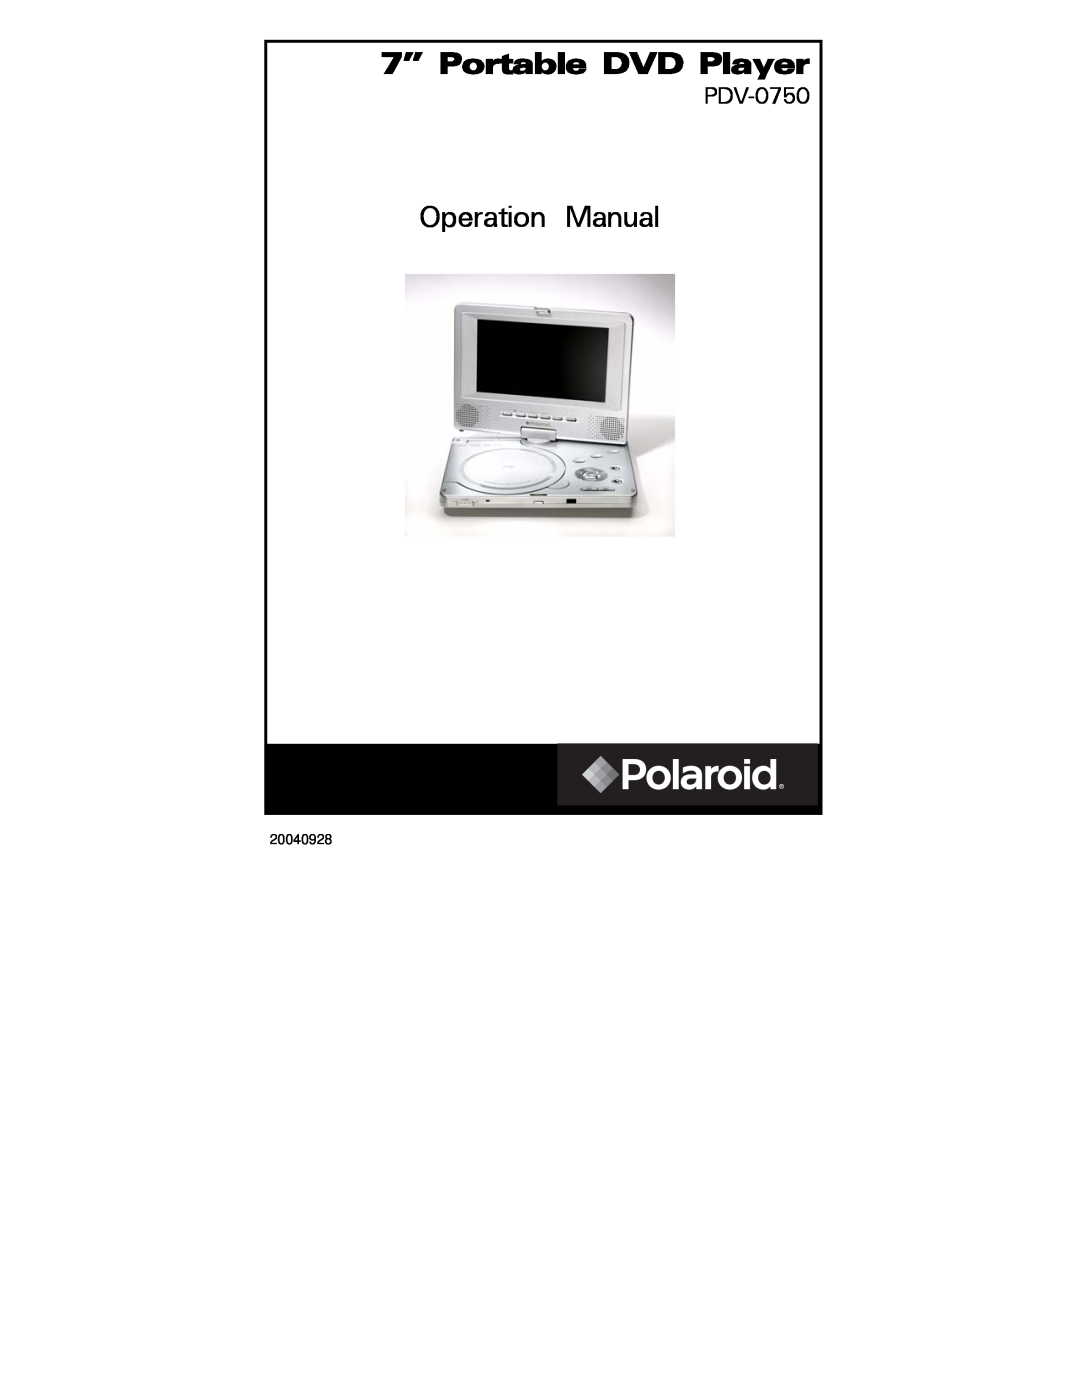 Polaroid PDV-0750 operation manual 7” Portable DVD Player, Operation Manual 